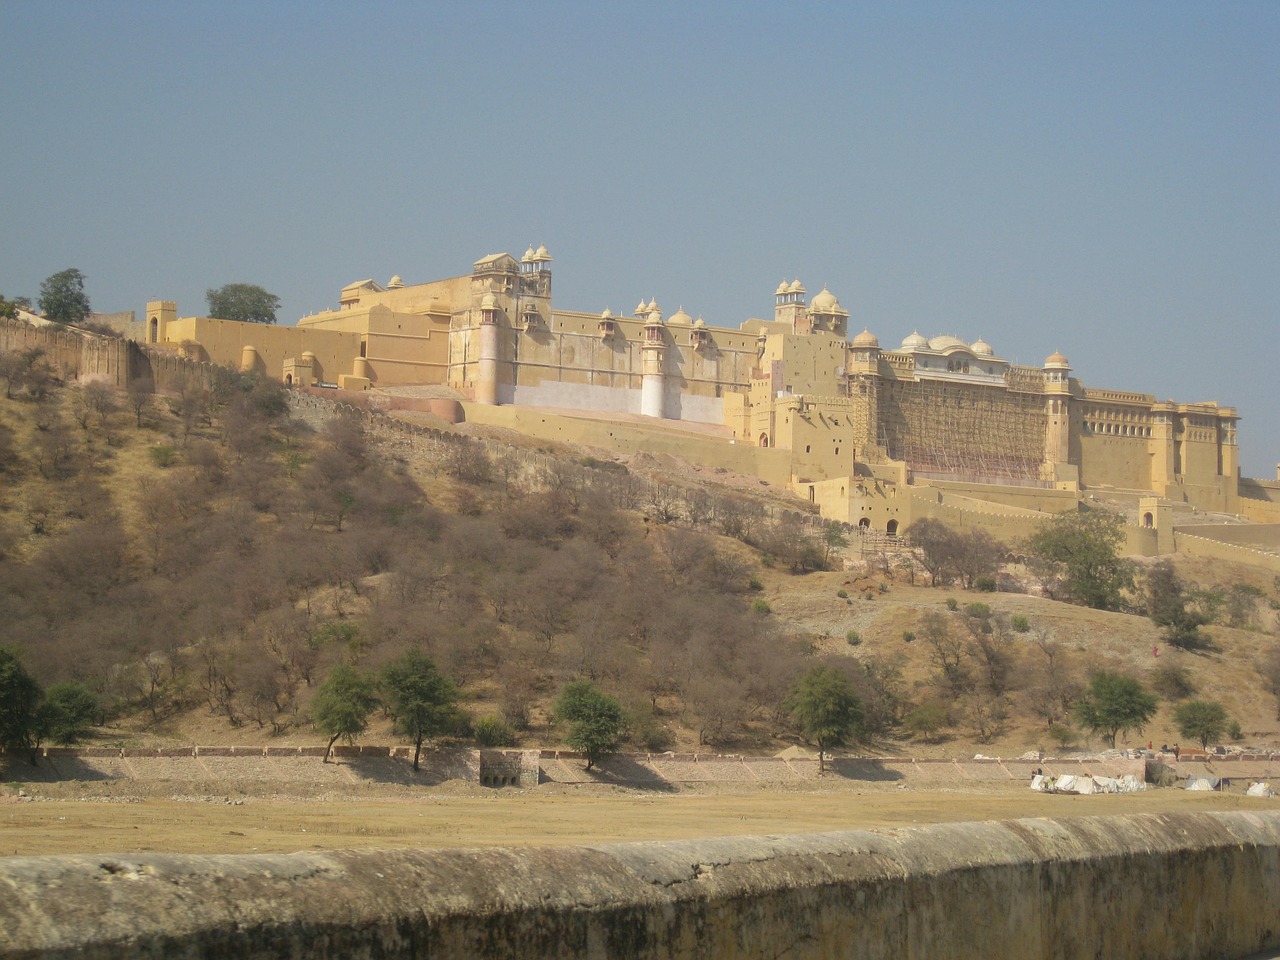 Amer, Rūmai, Karališkasis, Pilis, Jaipur, Indija, Orientyras, Rajasthan, Istorinis, Tvirtovė